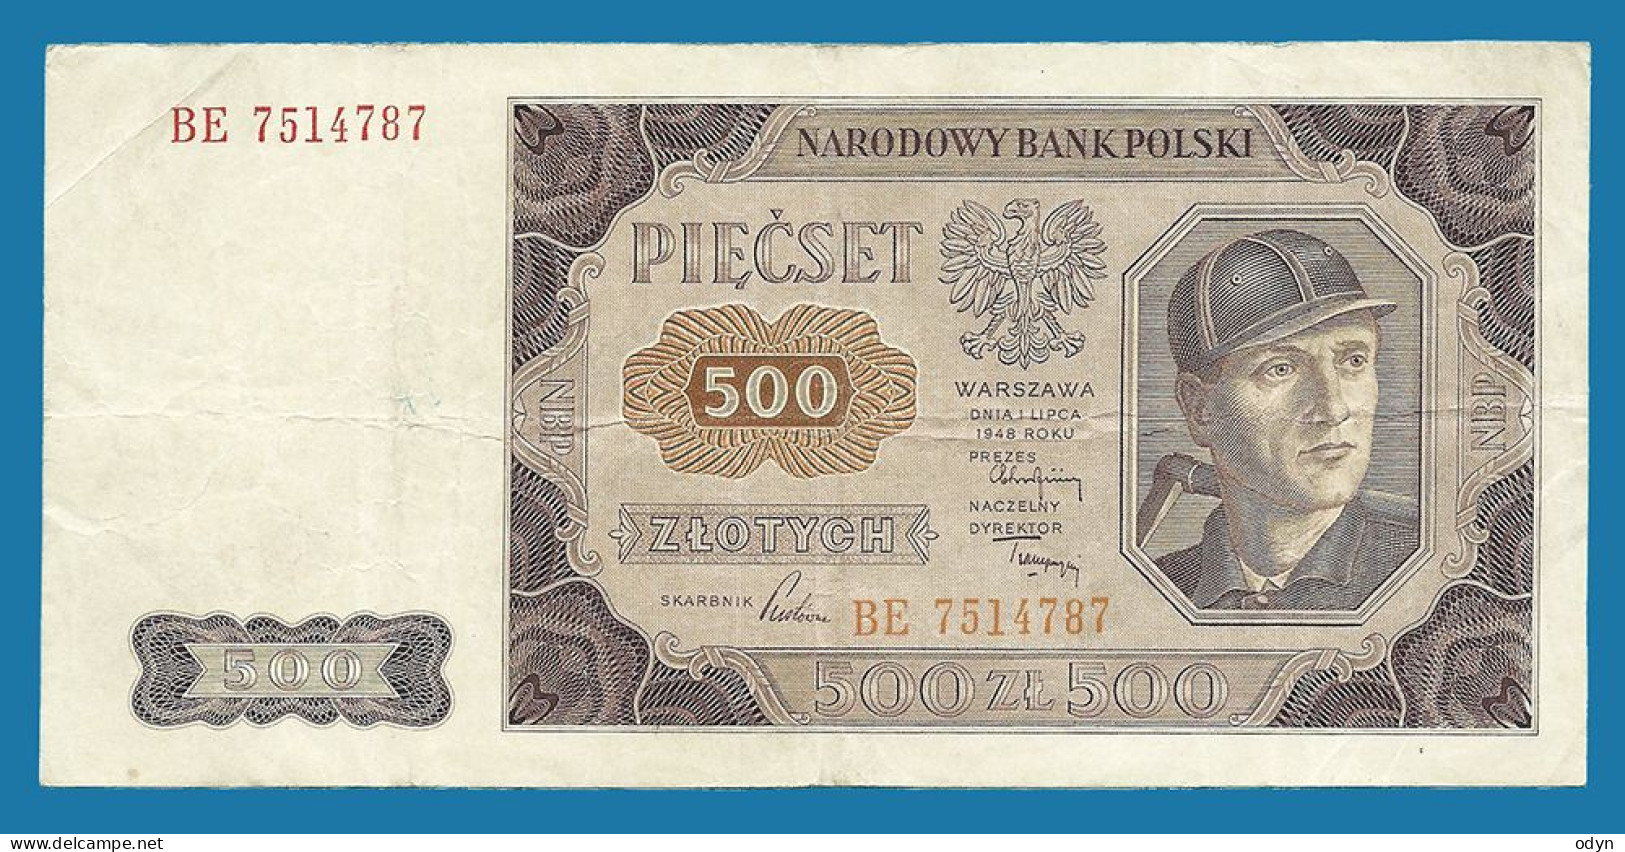 Poland, 1948, 500 Zlotych, Ser. BE 7514787, VF - Polen